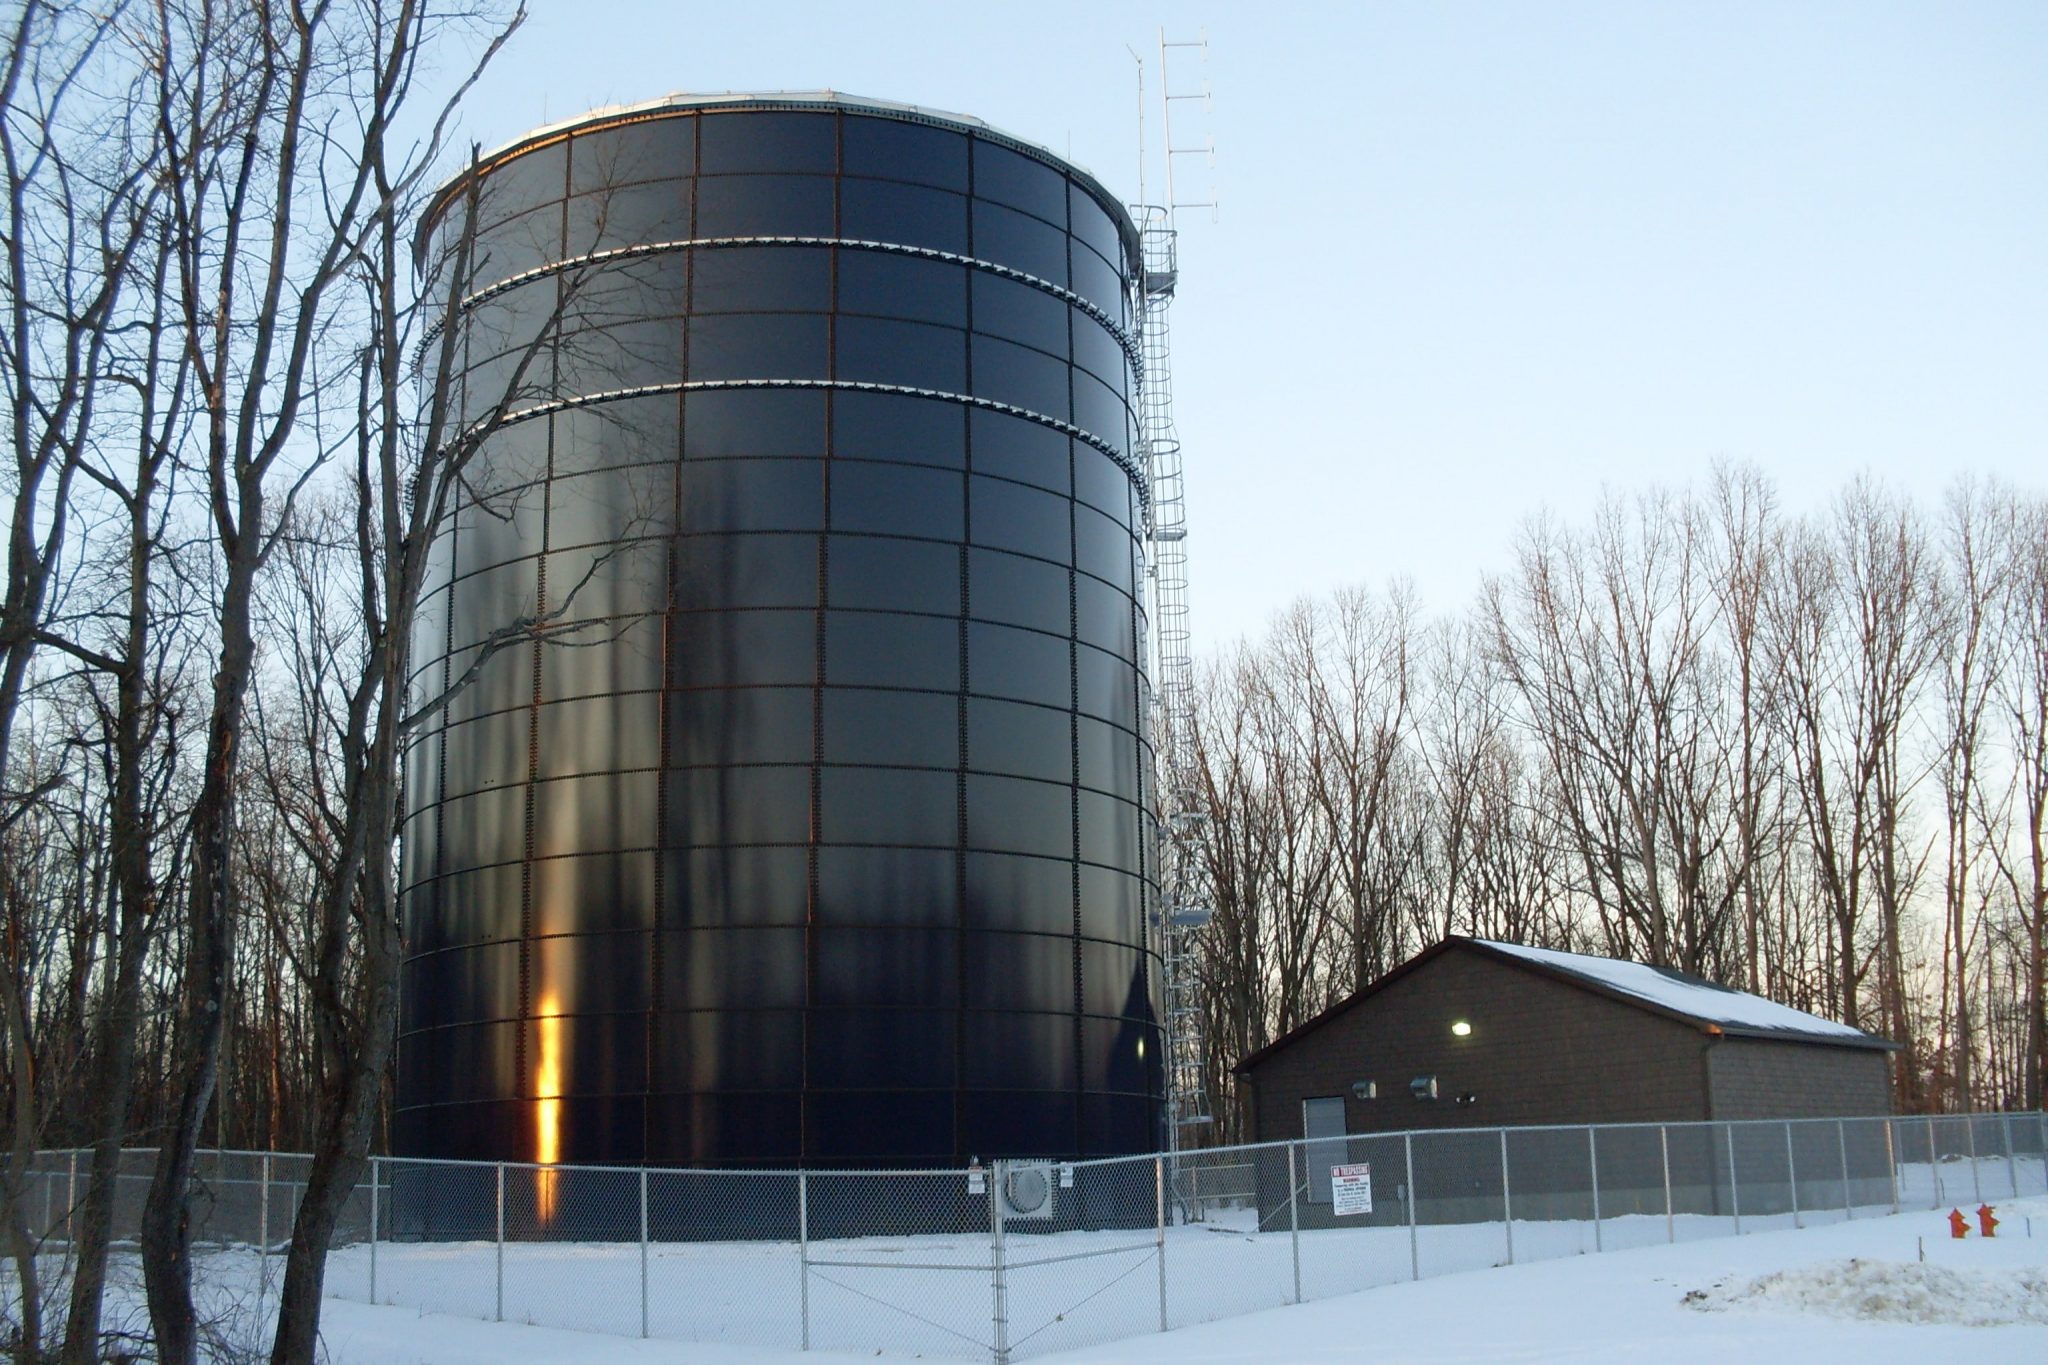 Aquastore Glass Lined Liquid Storage Tanks